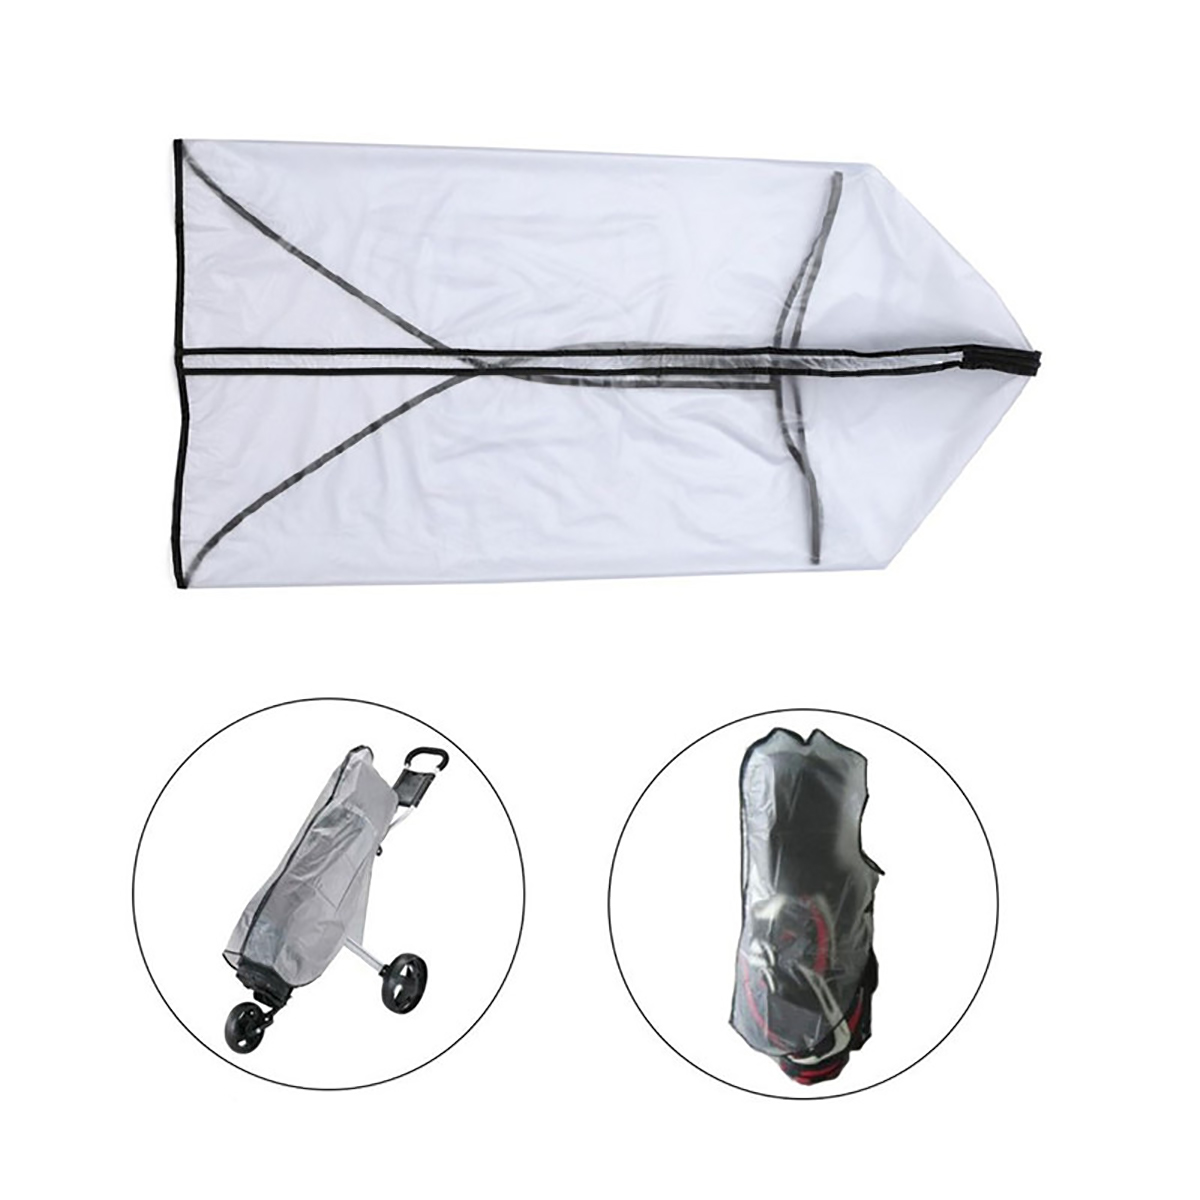 Transparent-Golf-Rain-Cover-Raincoat-Waterproof-Dustproof-Golf-Club-Bag-Protector-1549850-2